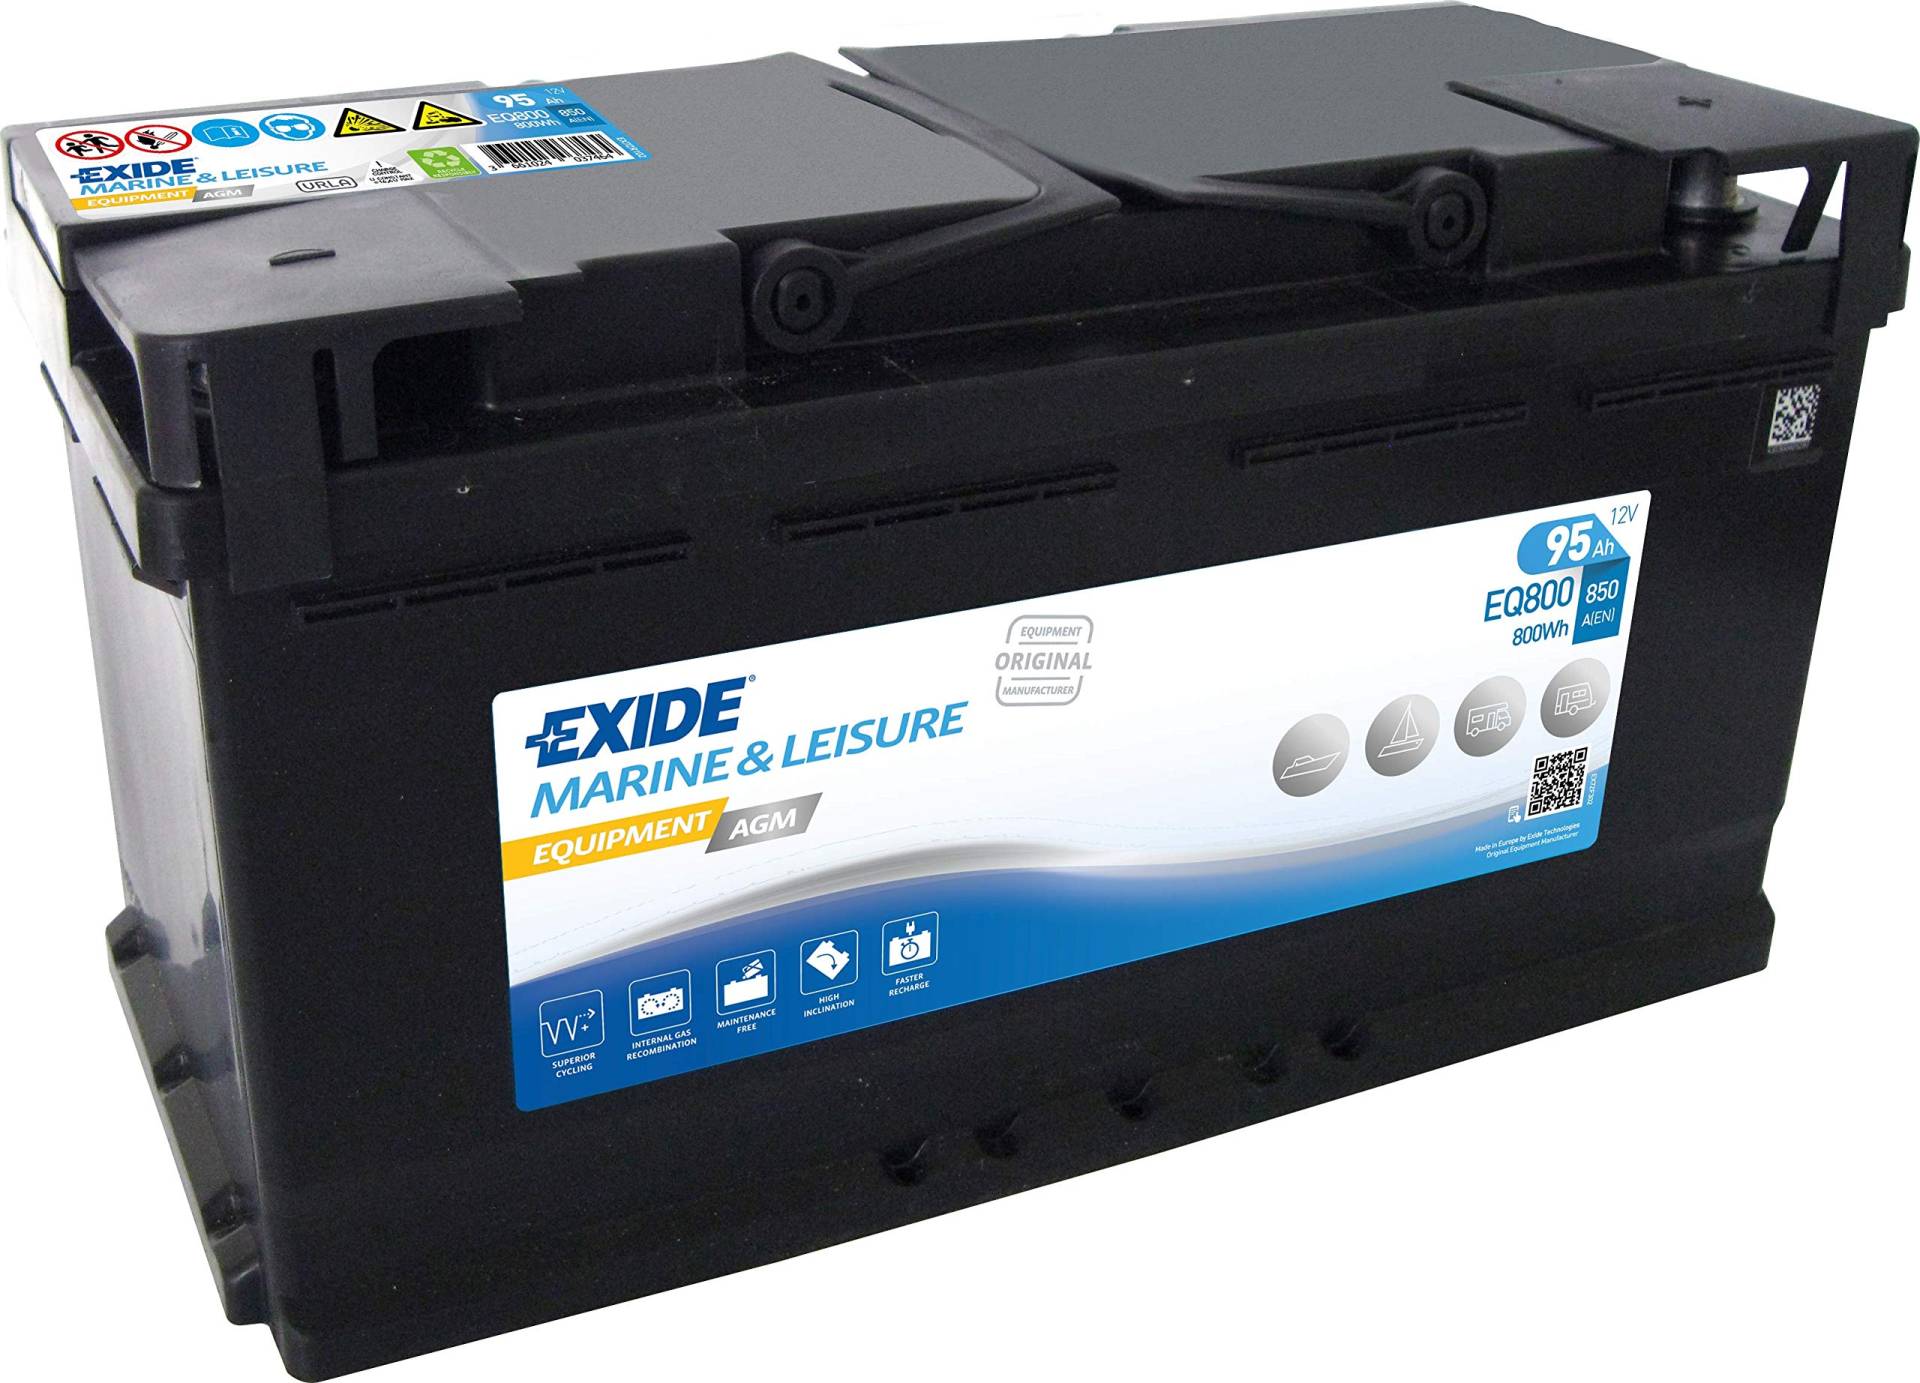 Exide EQ800 Equipment AGM Versorgungsbatterie12V 95Ah 800Wh 850A von Exide